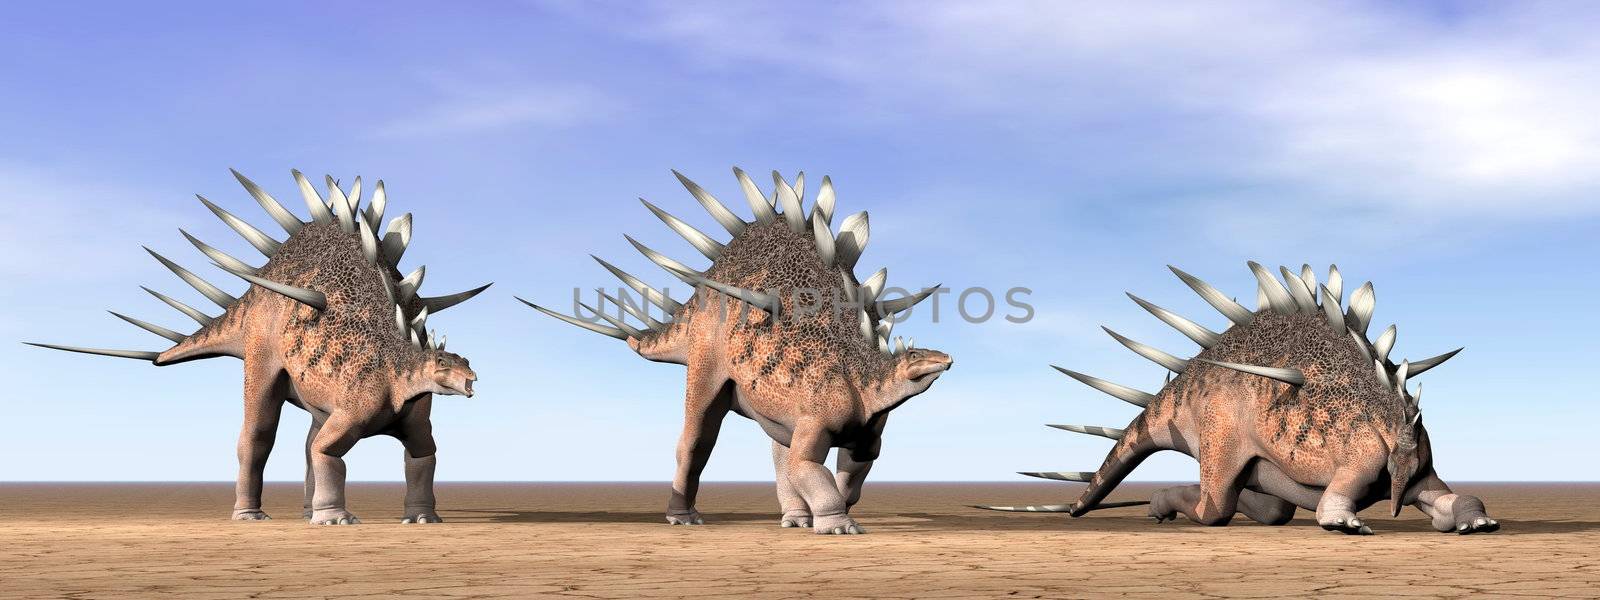 Kentrosaurus dinosaurs in the desert - 3D render by Elenaphotos21